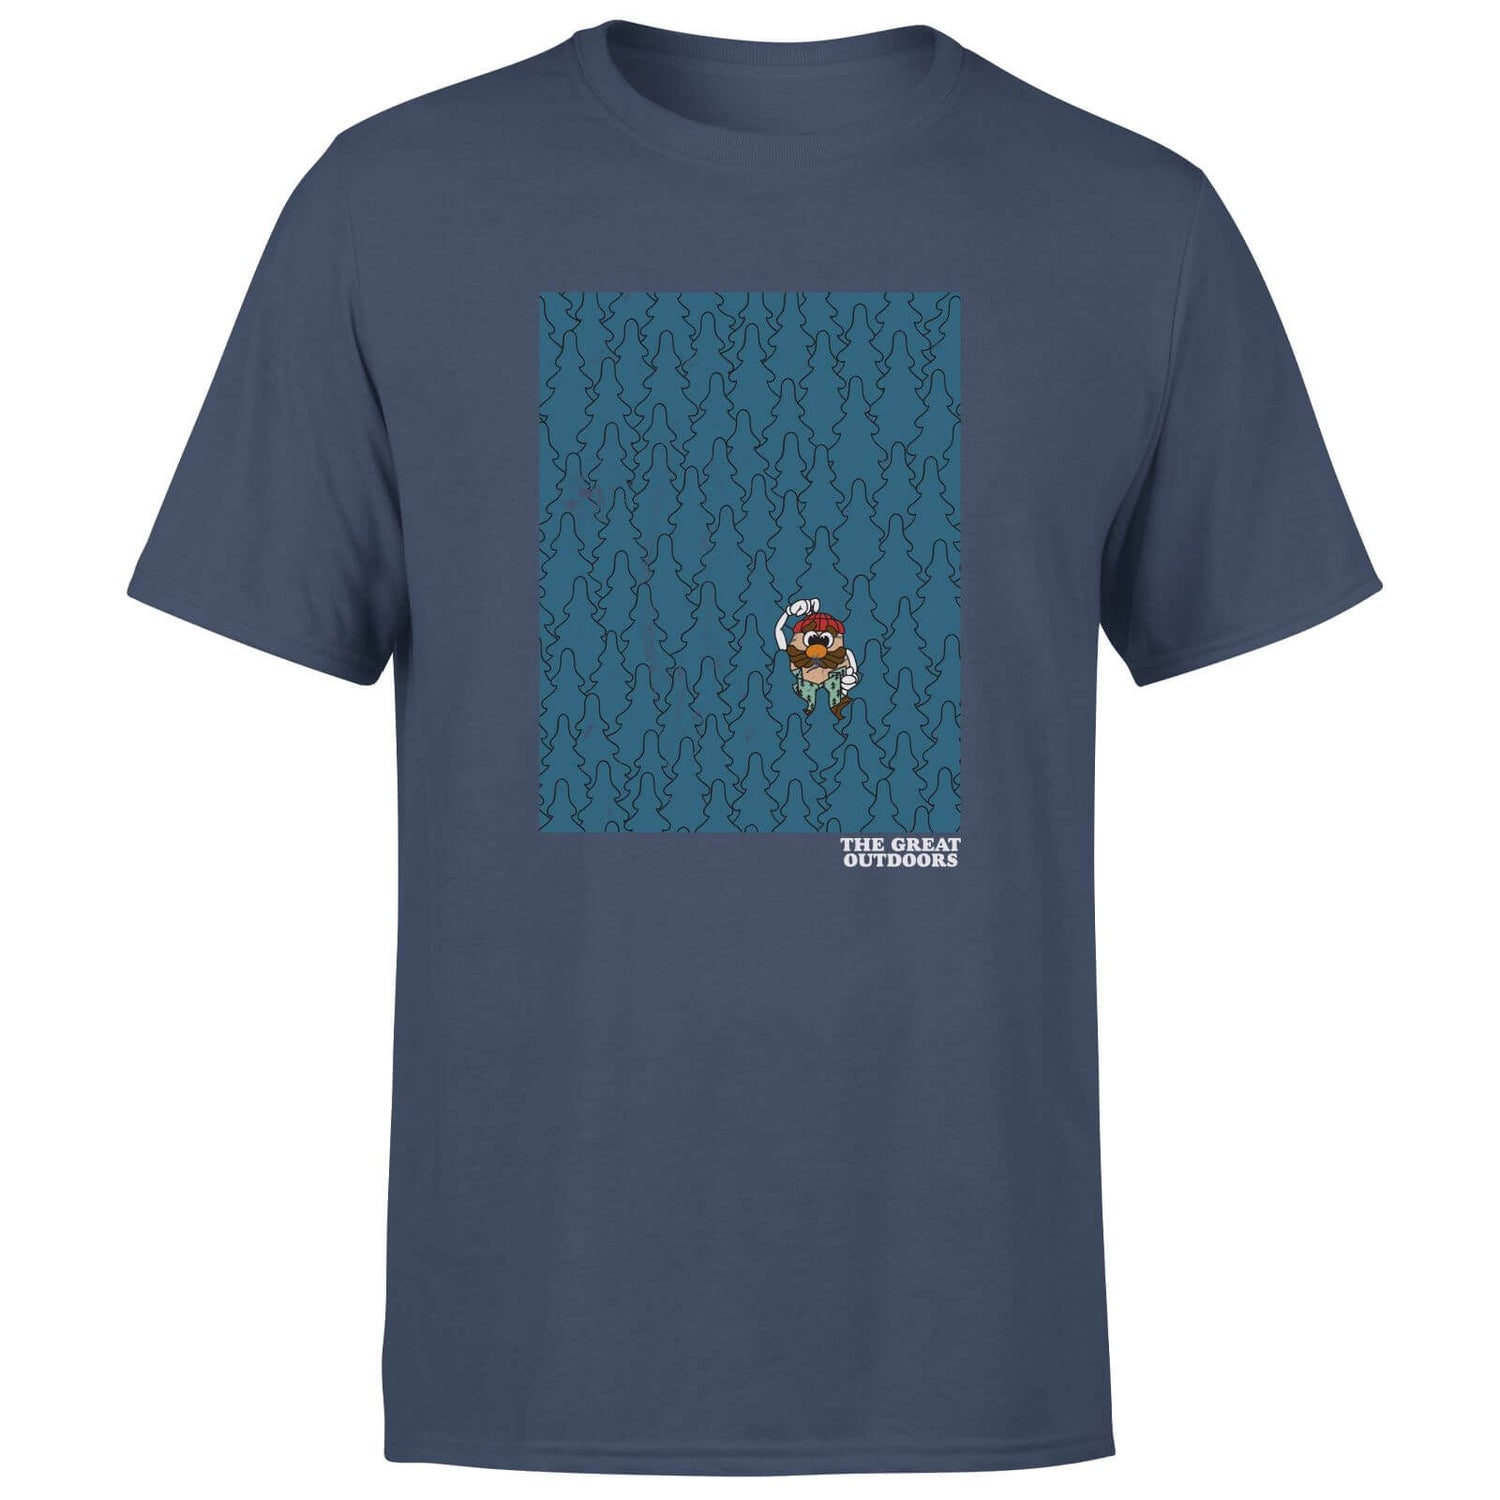 Camiseta para hombre The Great Outdoors de Mr. Potato Head - Azul marino